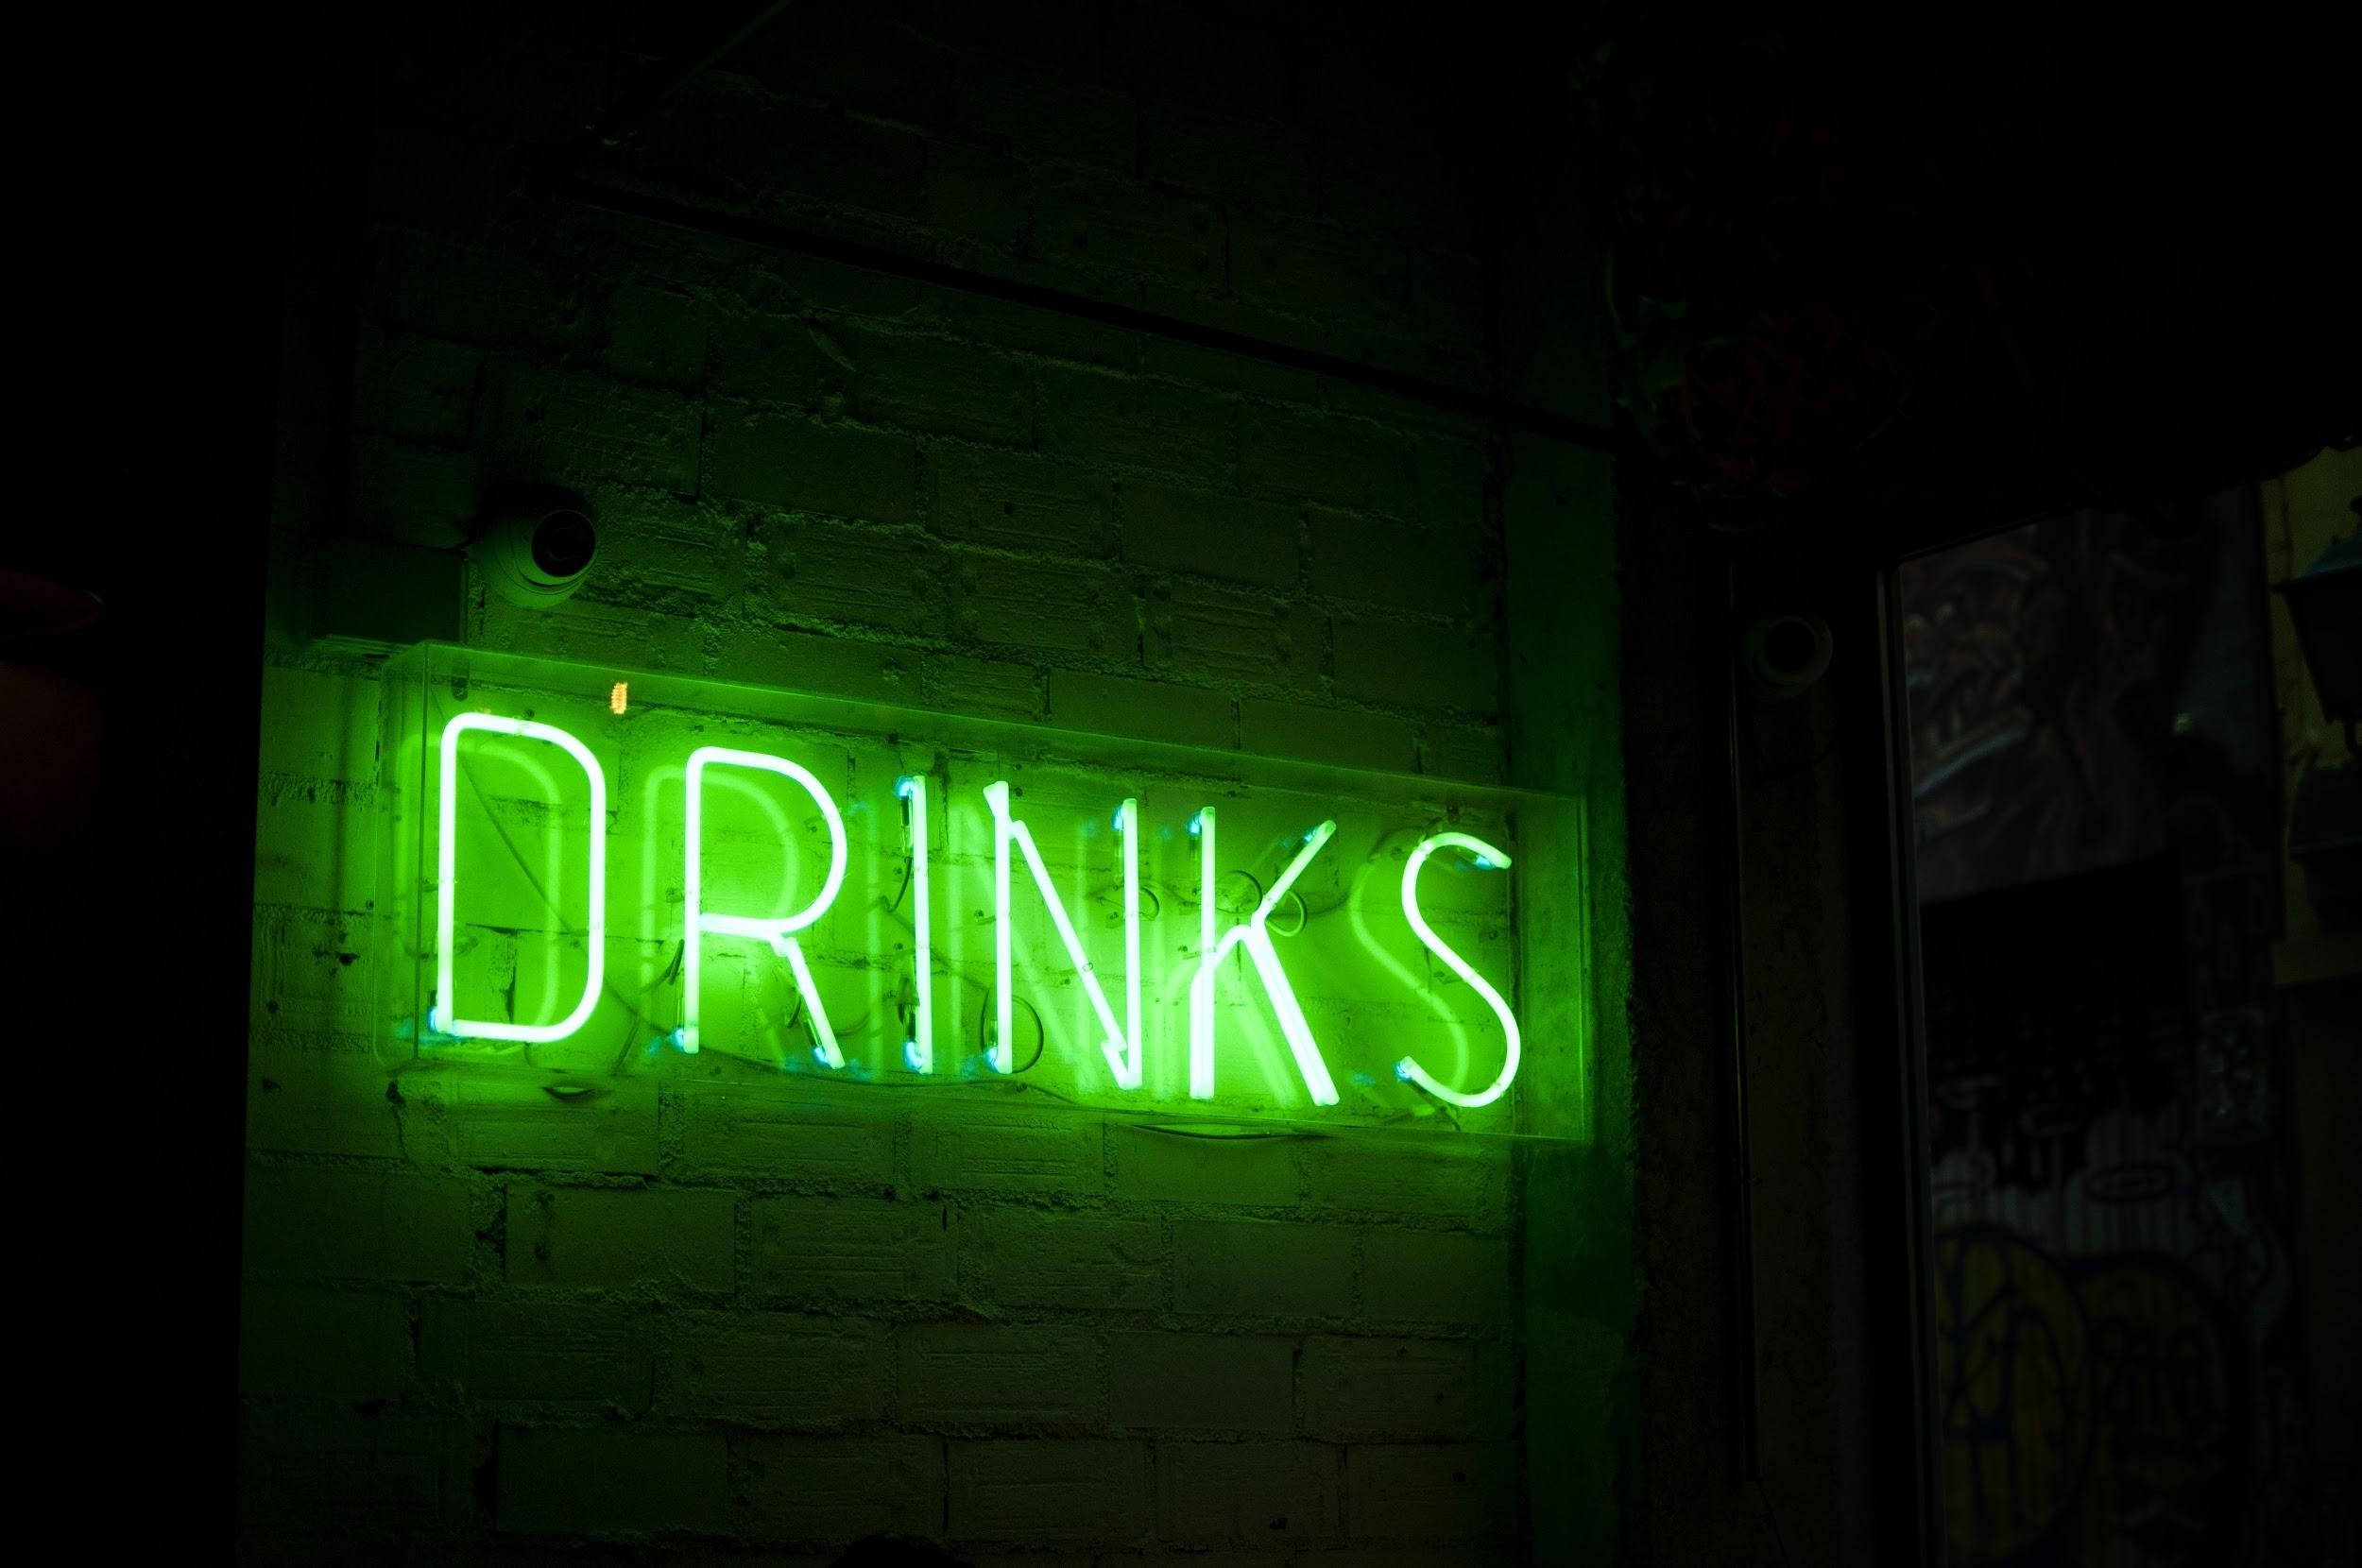 Drinks neon sign